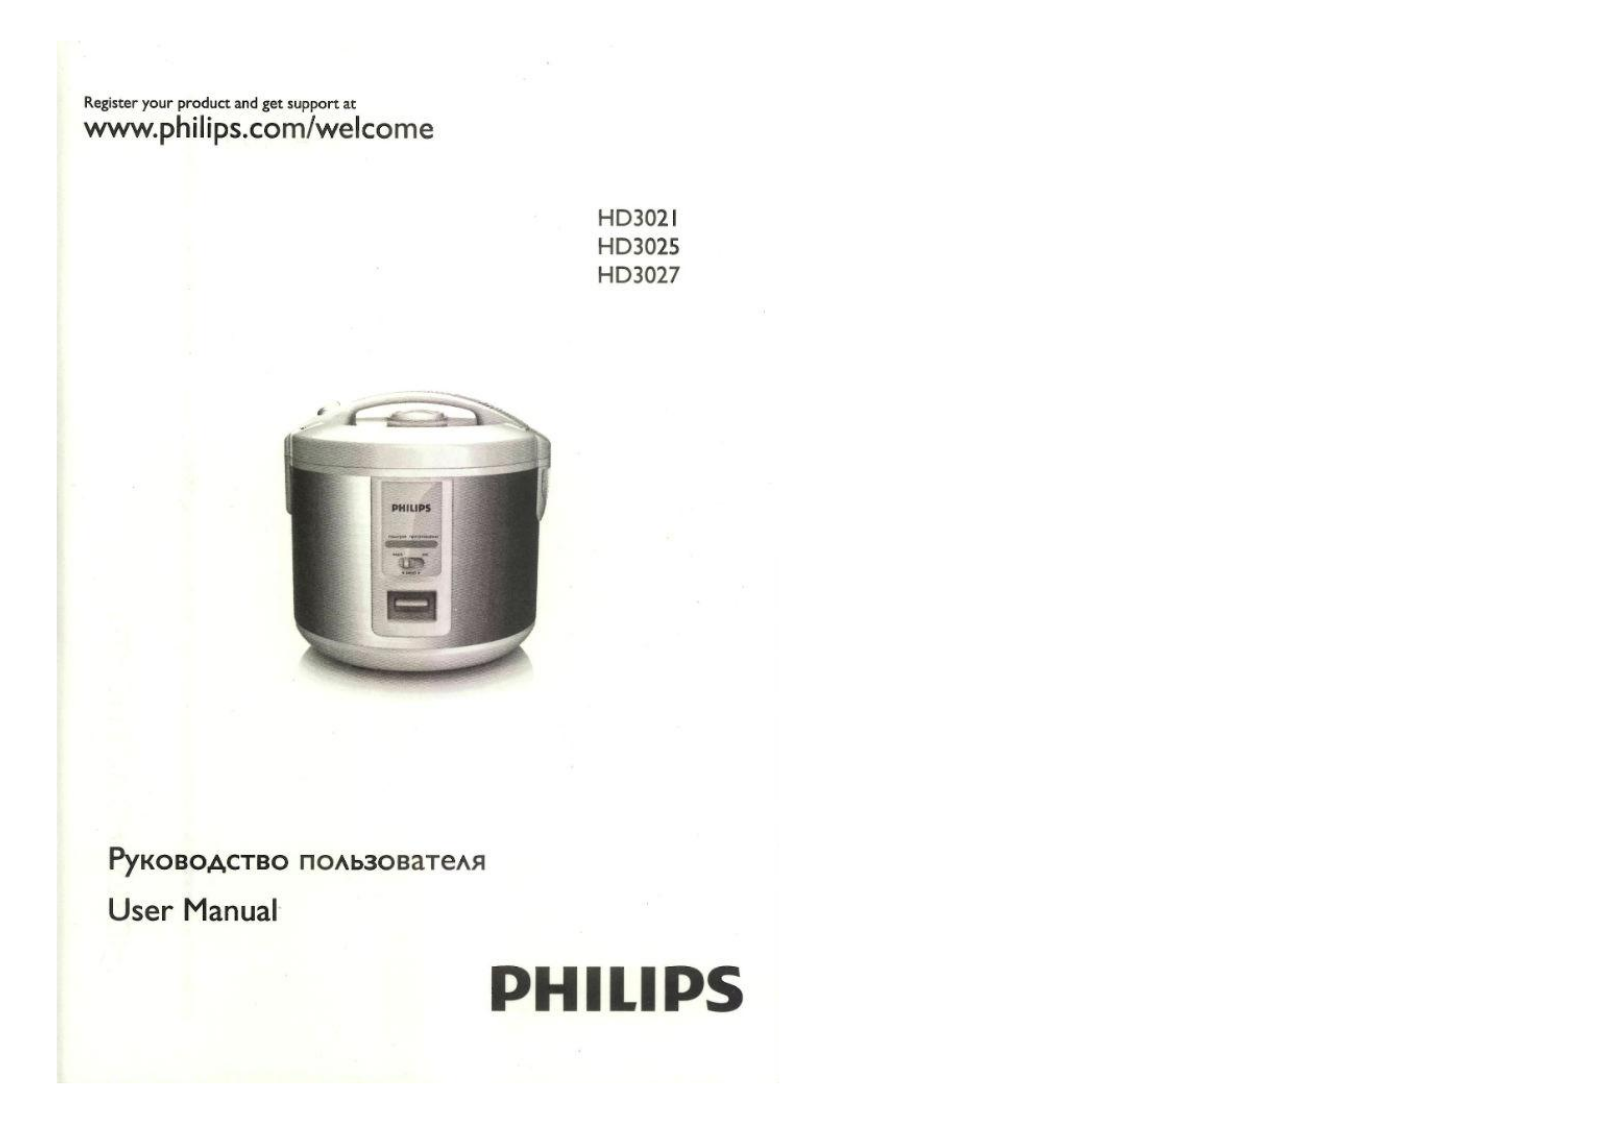 Philips HD3027 User Manual